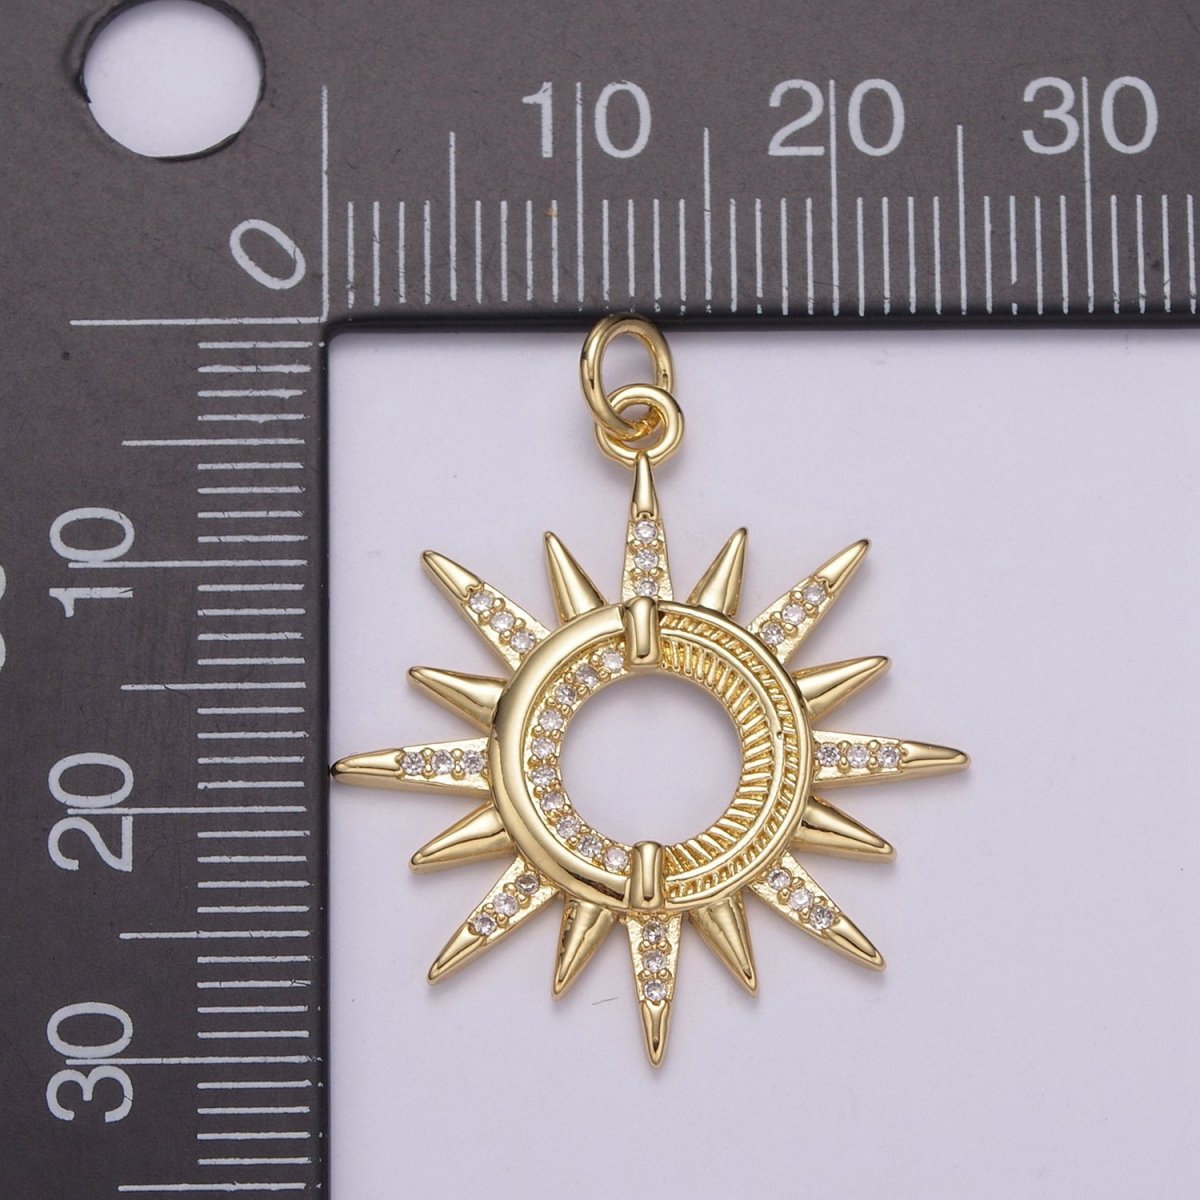 Dainty 14K Gold Filled Ancient Sun pendant charms, celestial sunburst charm dangle pendant Necklace Earrings C-198 - DLUXCA